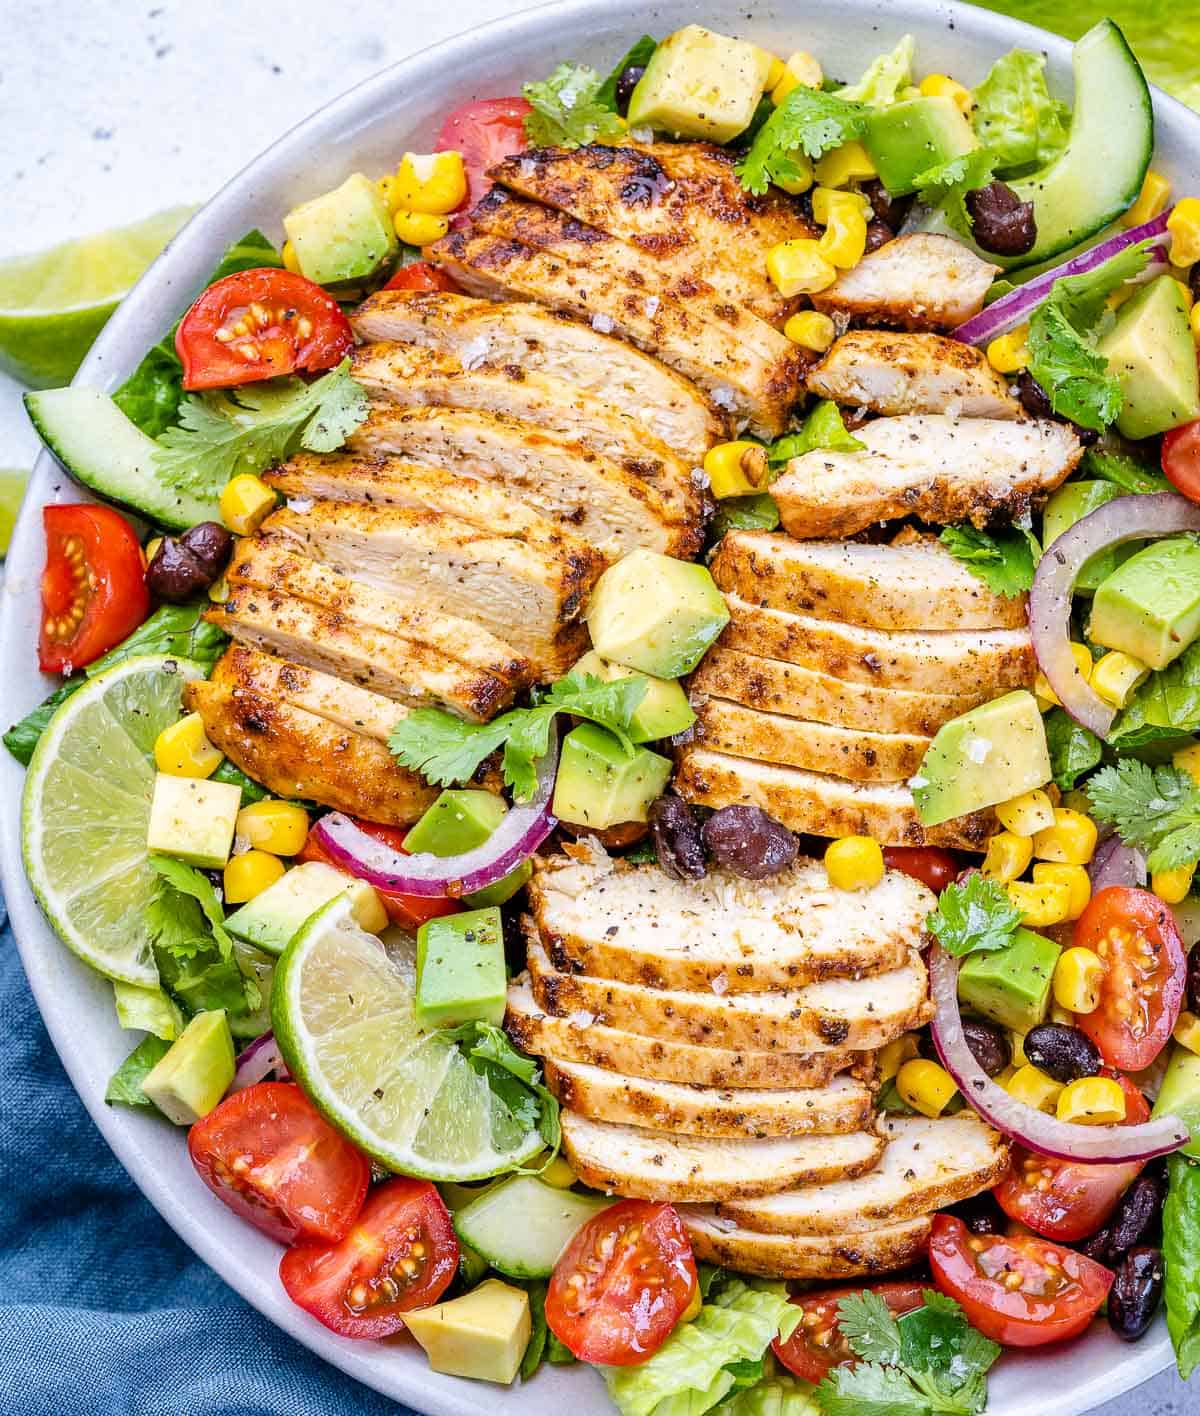 https://healthyfitnessmeals.com/wp-content/uploads/2021/04/Southwest-chicken-salad-9.jpg